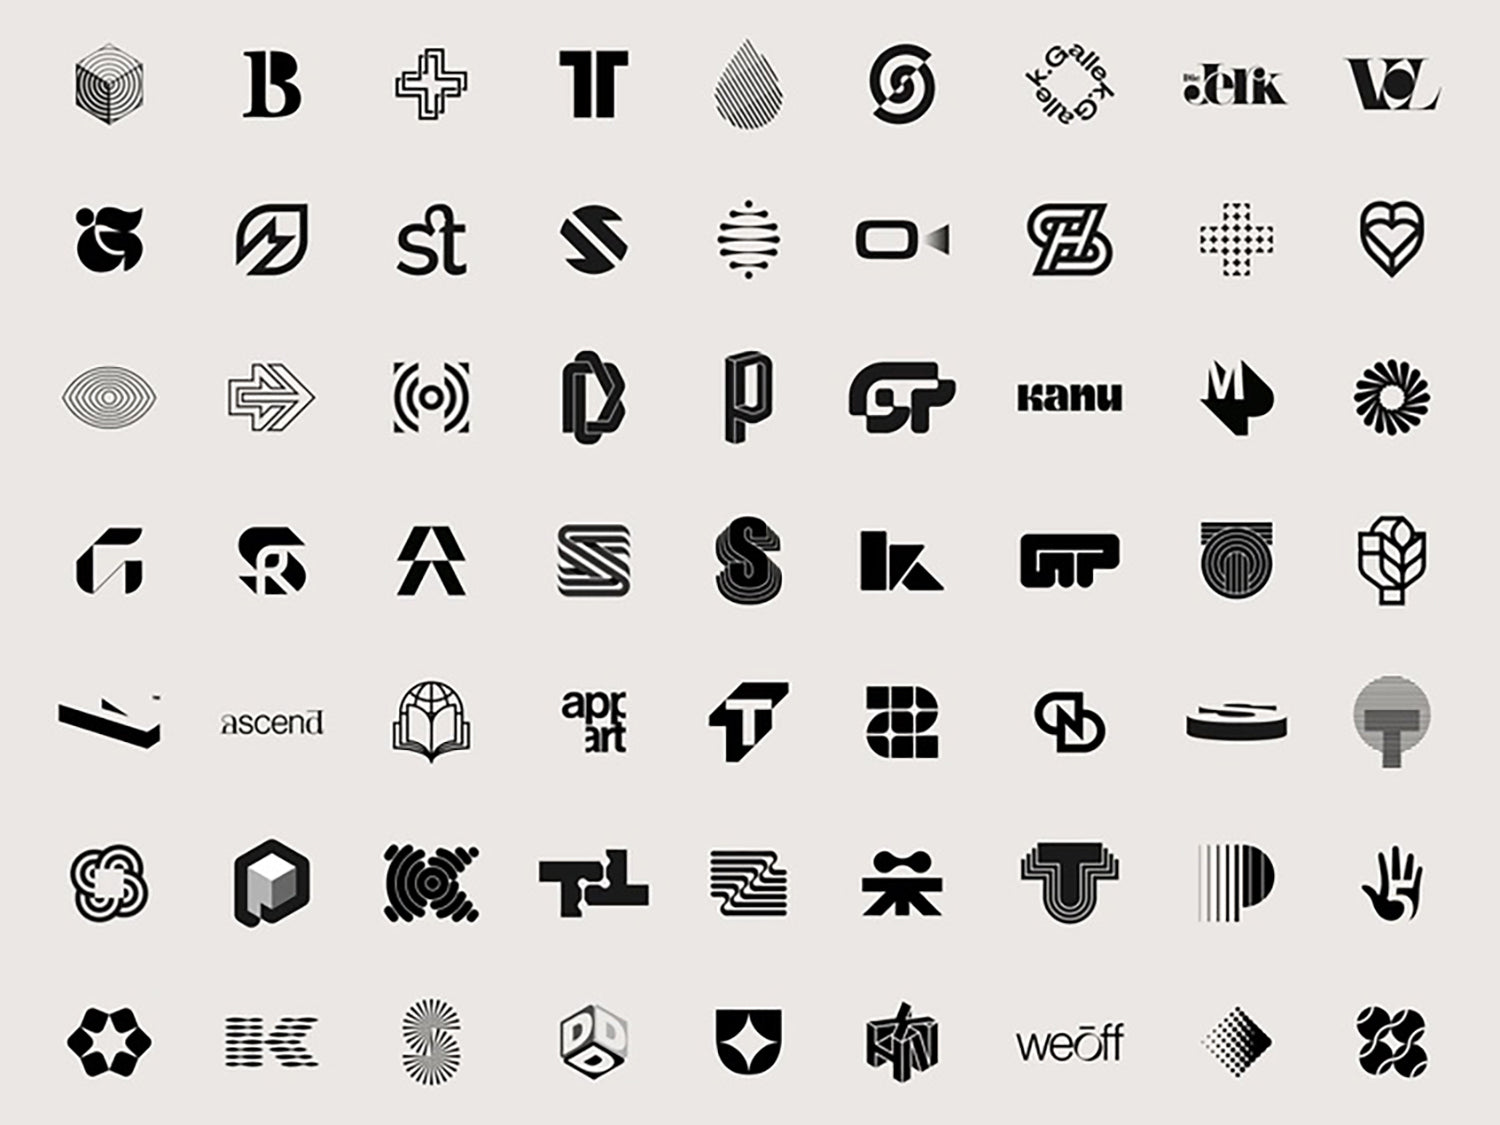 30 Logos: Brand Families ideas  brand architecture, sub brands, logo design